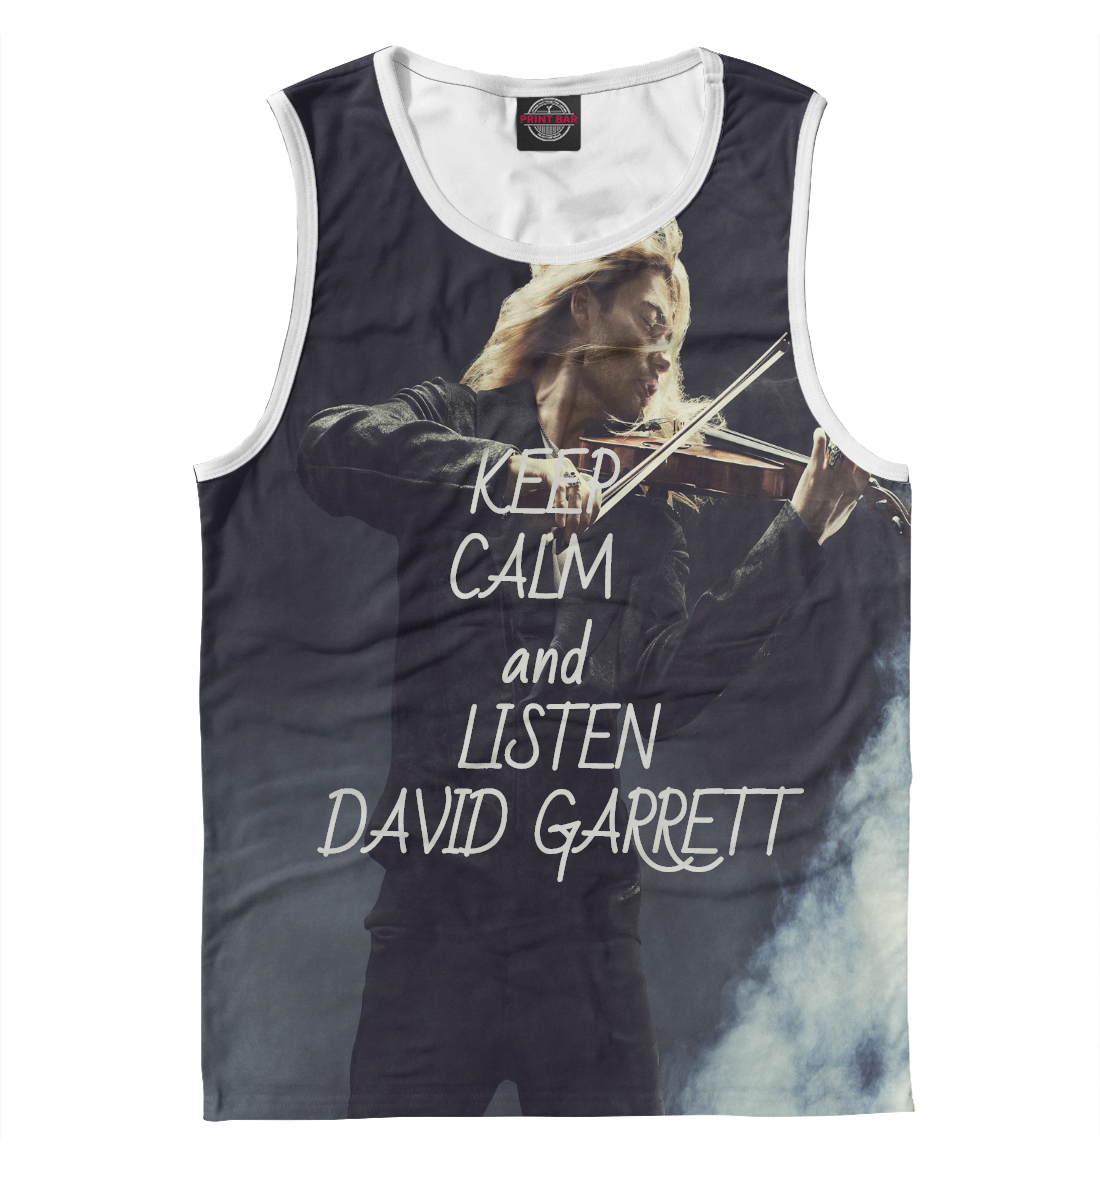 Keep calm and listen David Garrett honoré de balzac eve and david